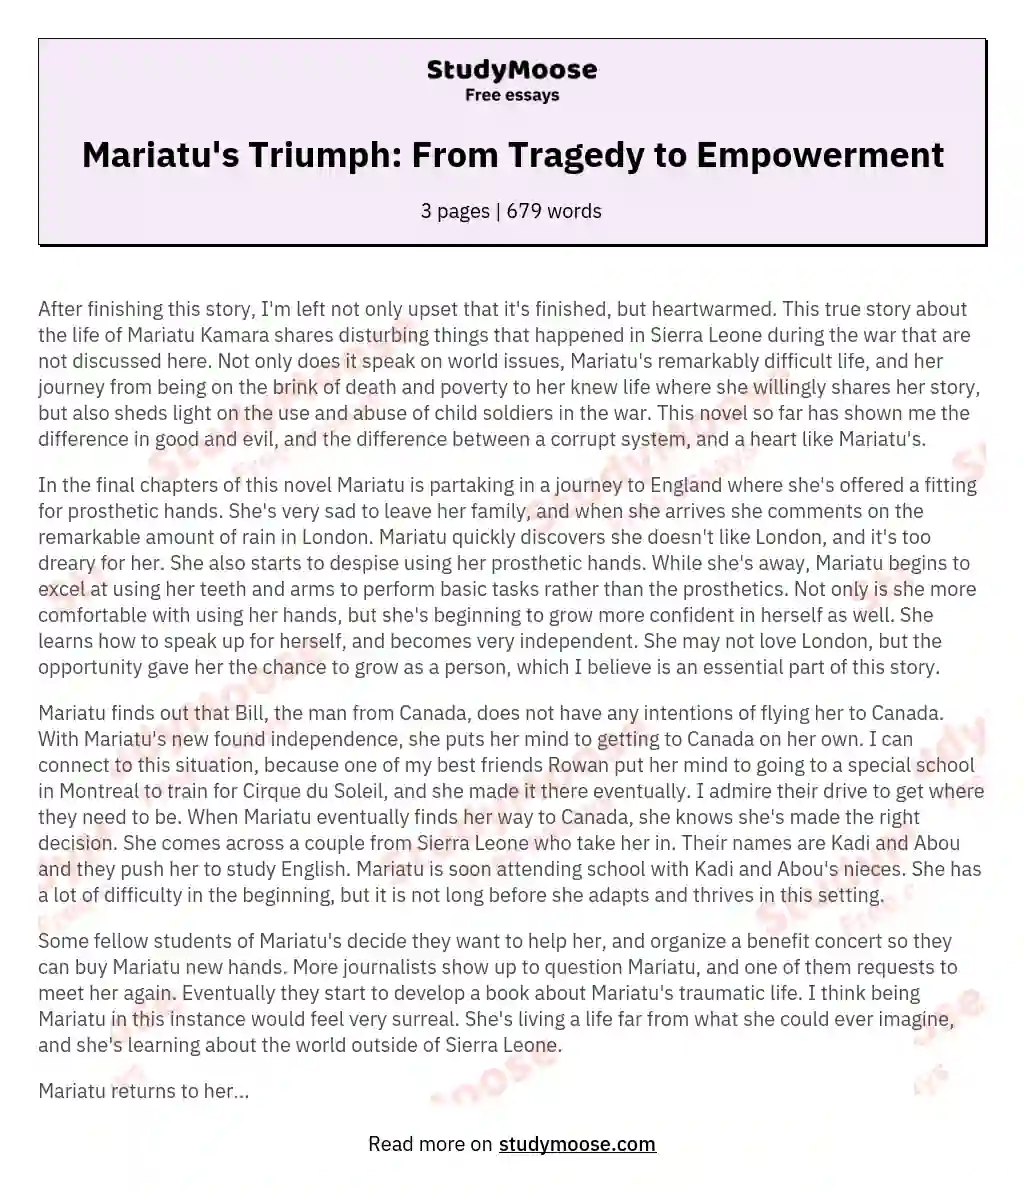 Mariatu's Triumph: From Tragedy to Empowerment essay